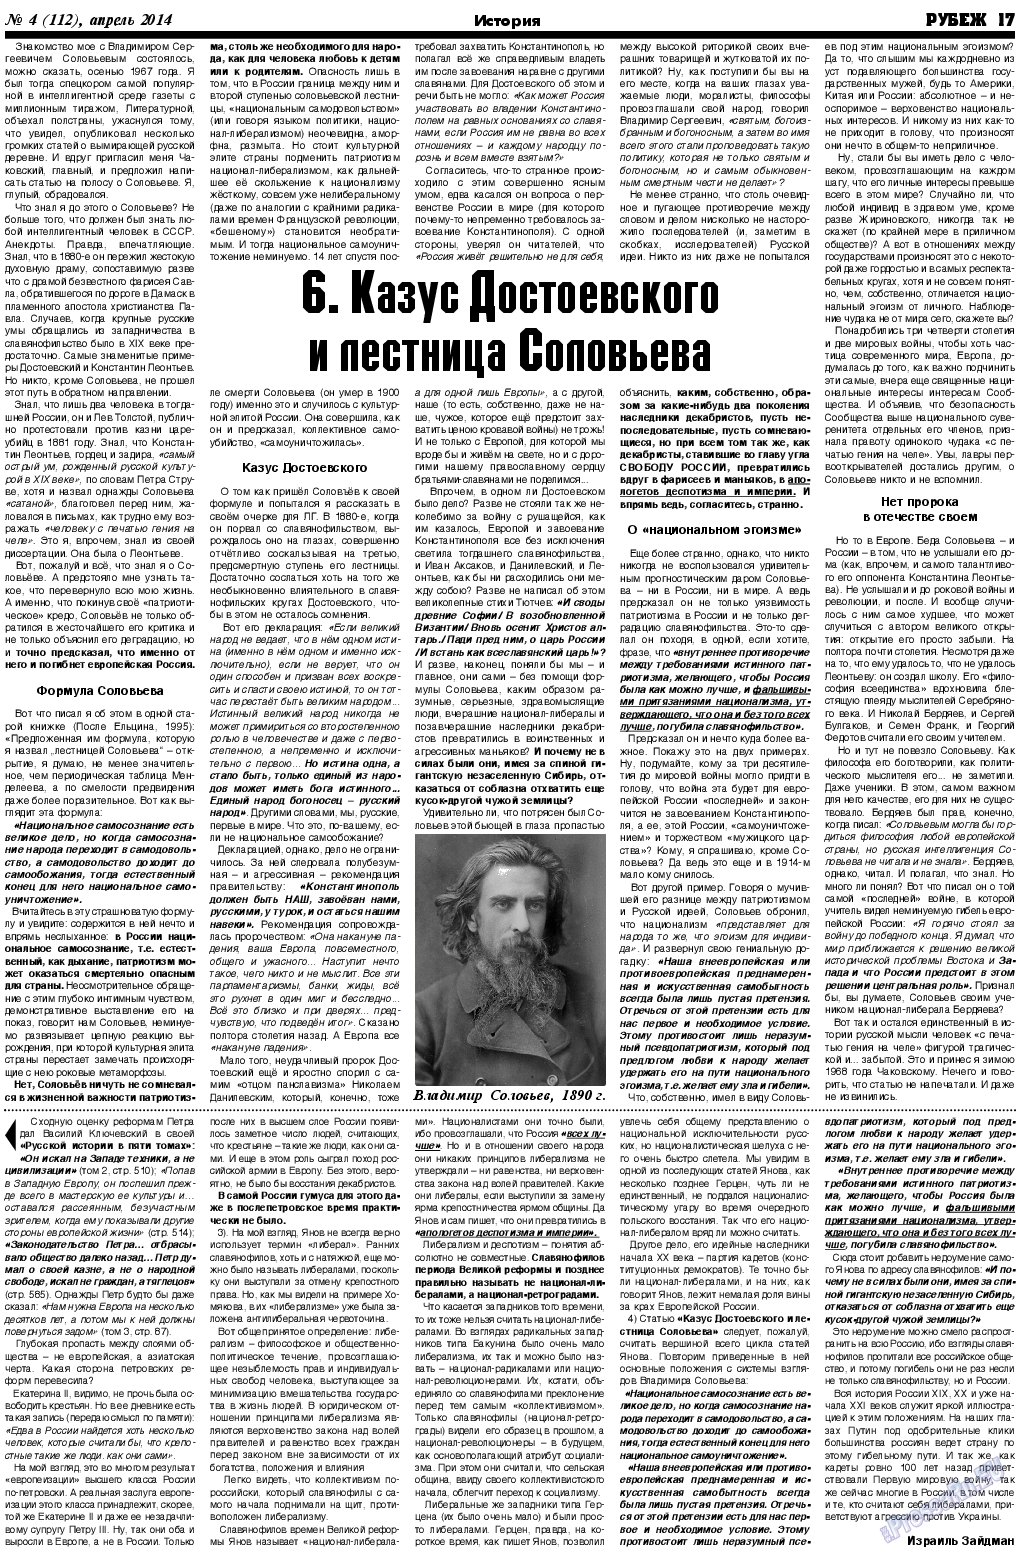 Рубеж, газета. 2014 №4 стр.17